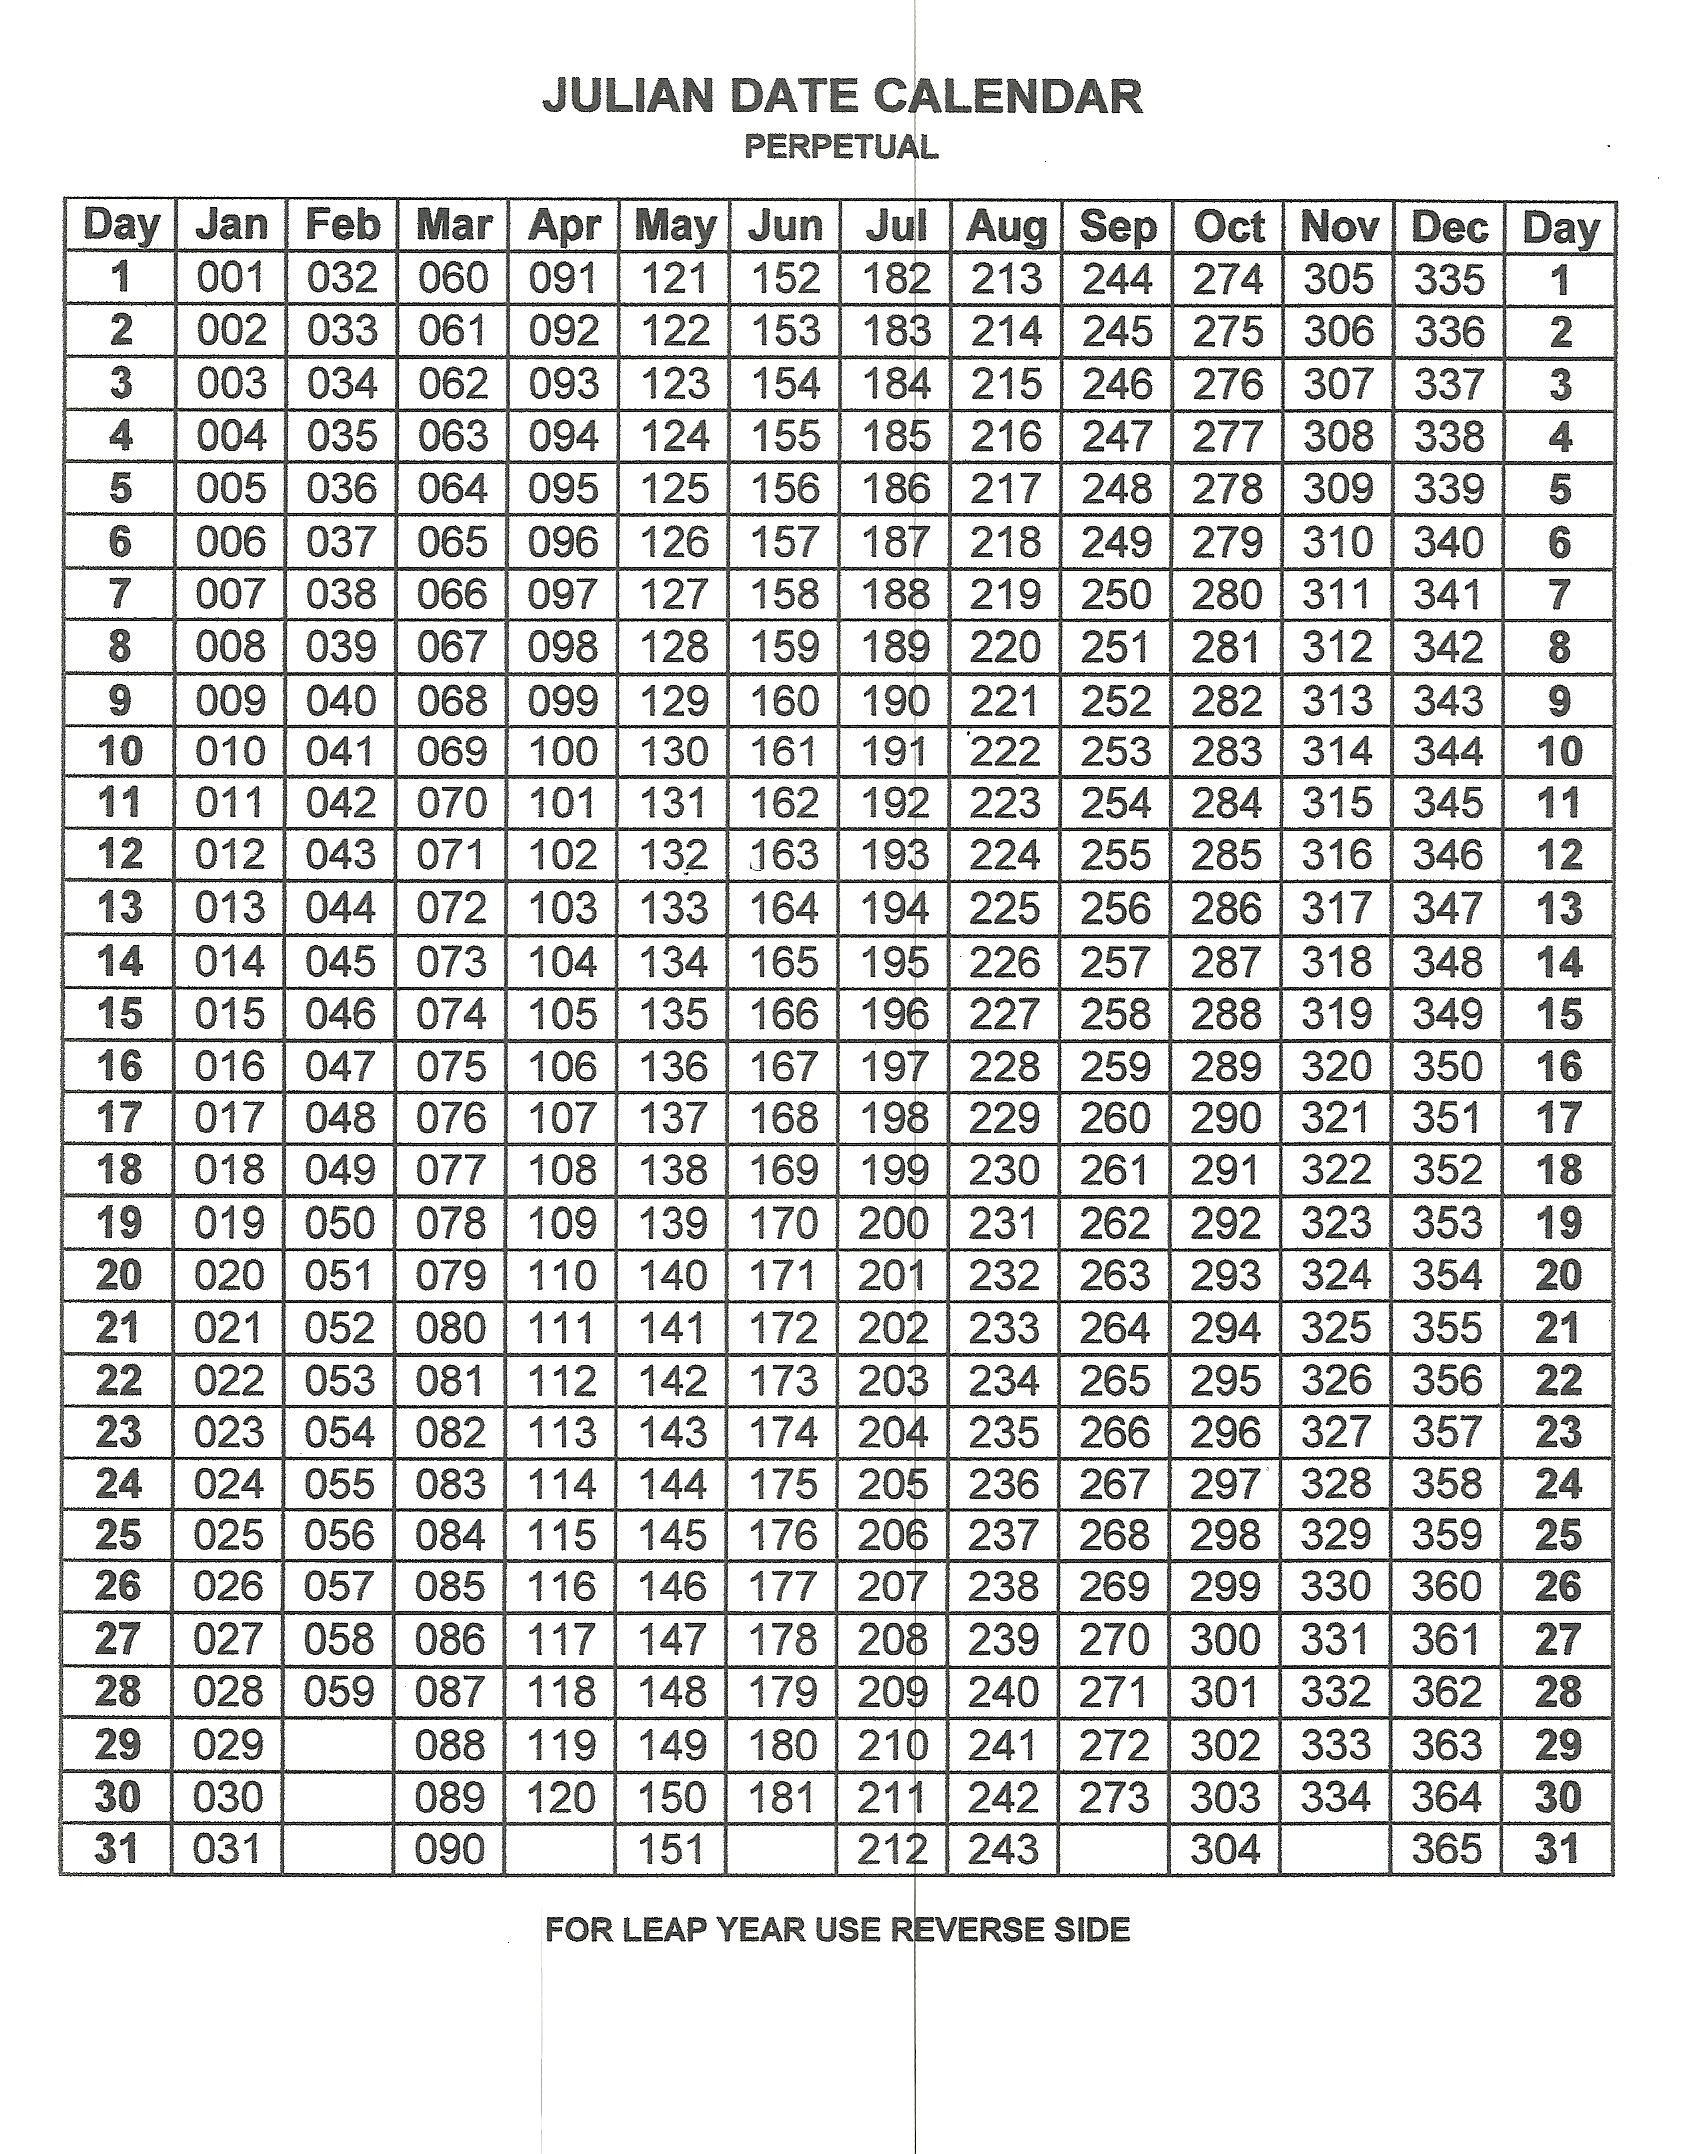 Perpetual Julian Date Calendar | Calendar Printables  Julian Calendar 2020